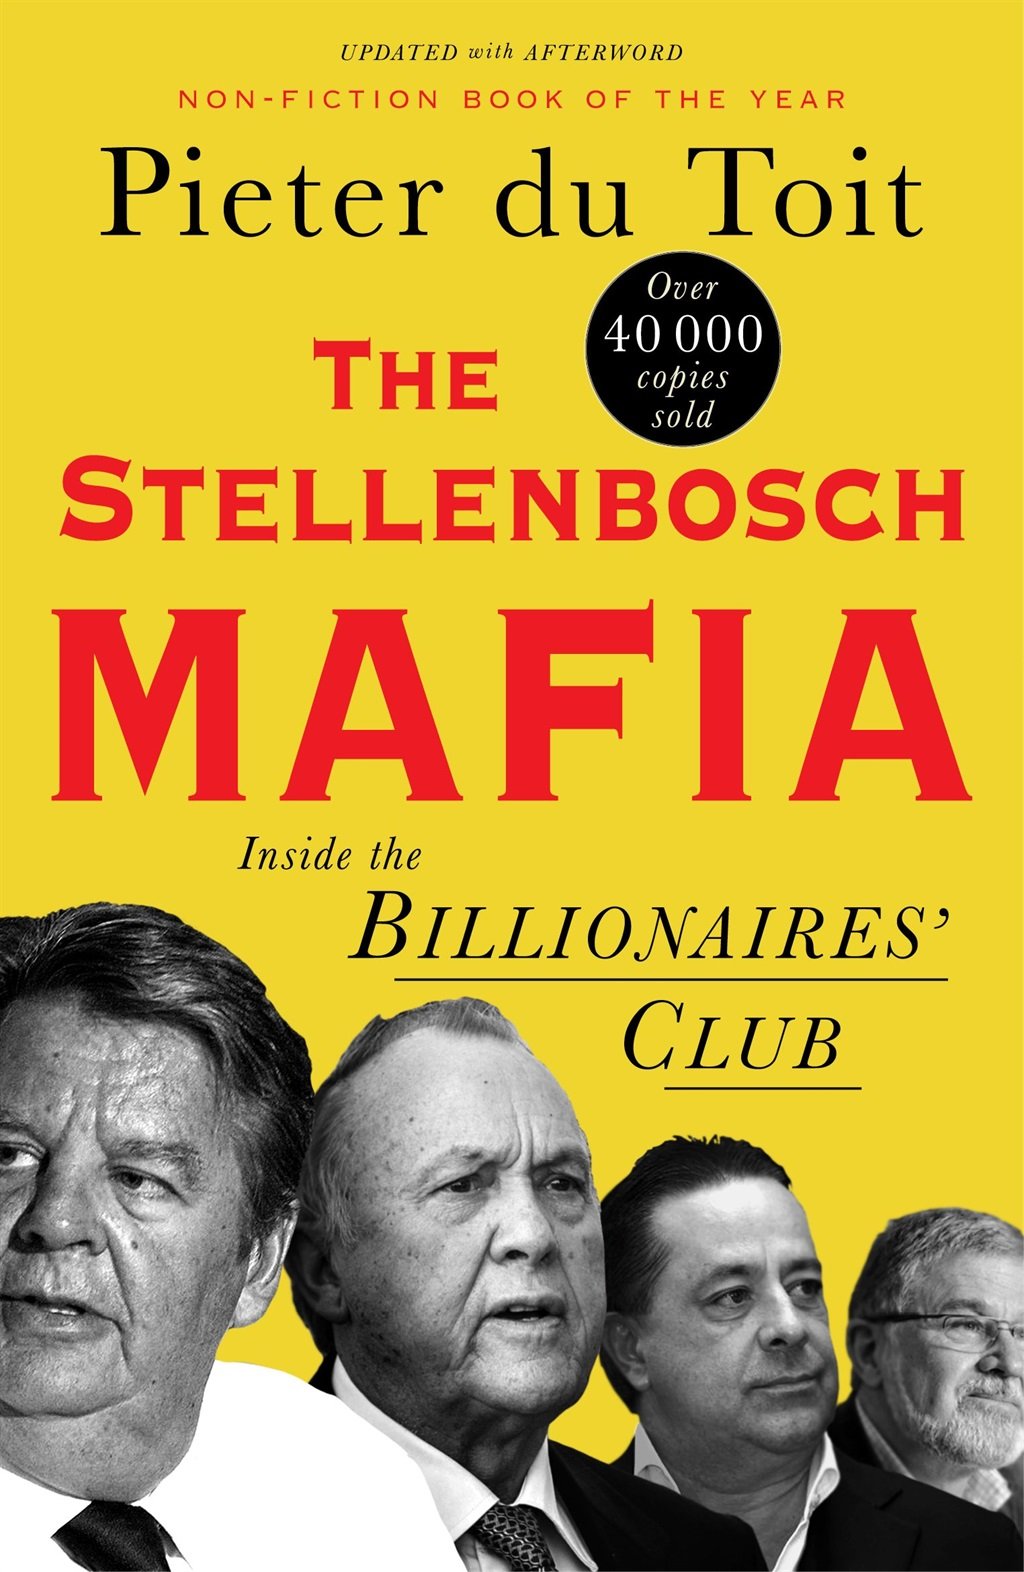 Cover of the 'Stellenbosch Mafia' (Supplied) 